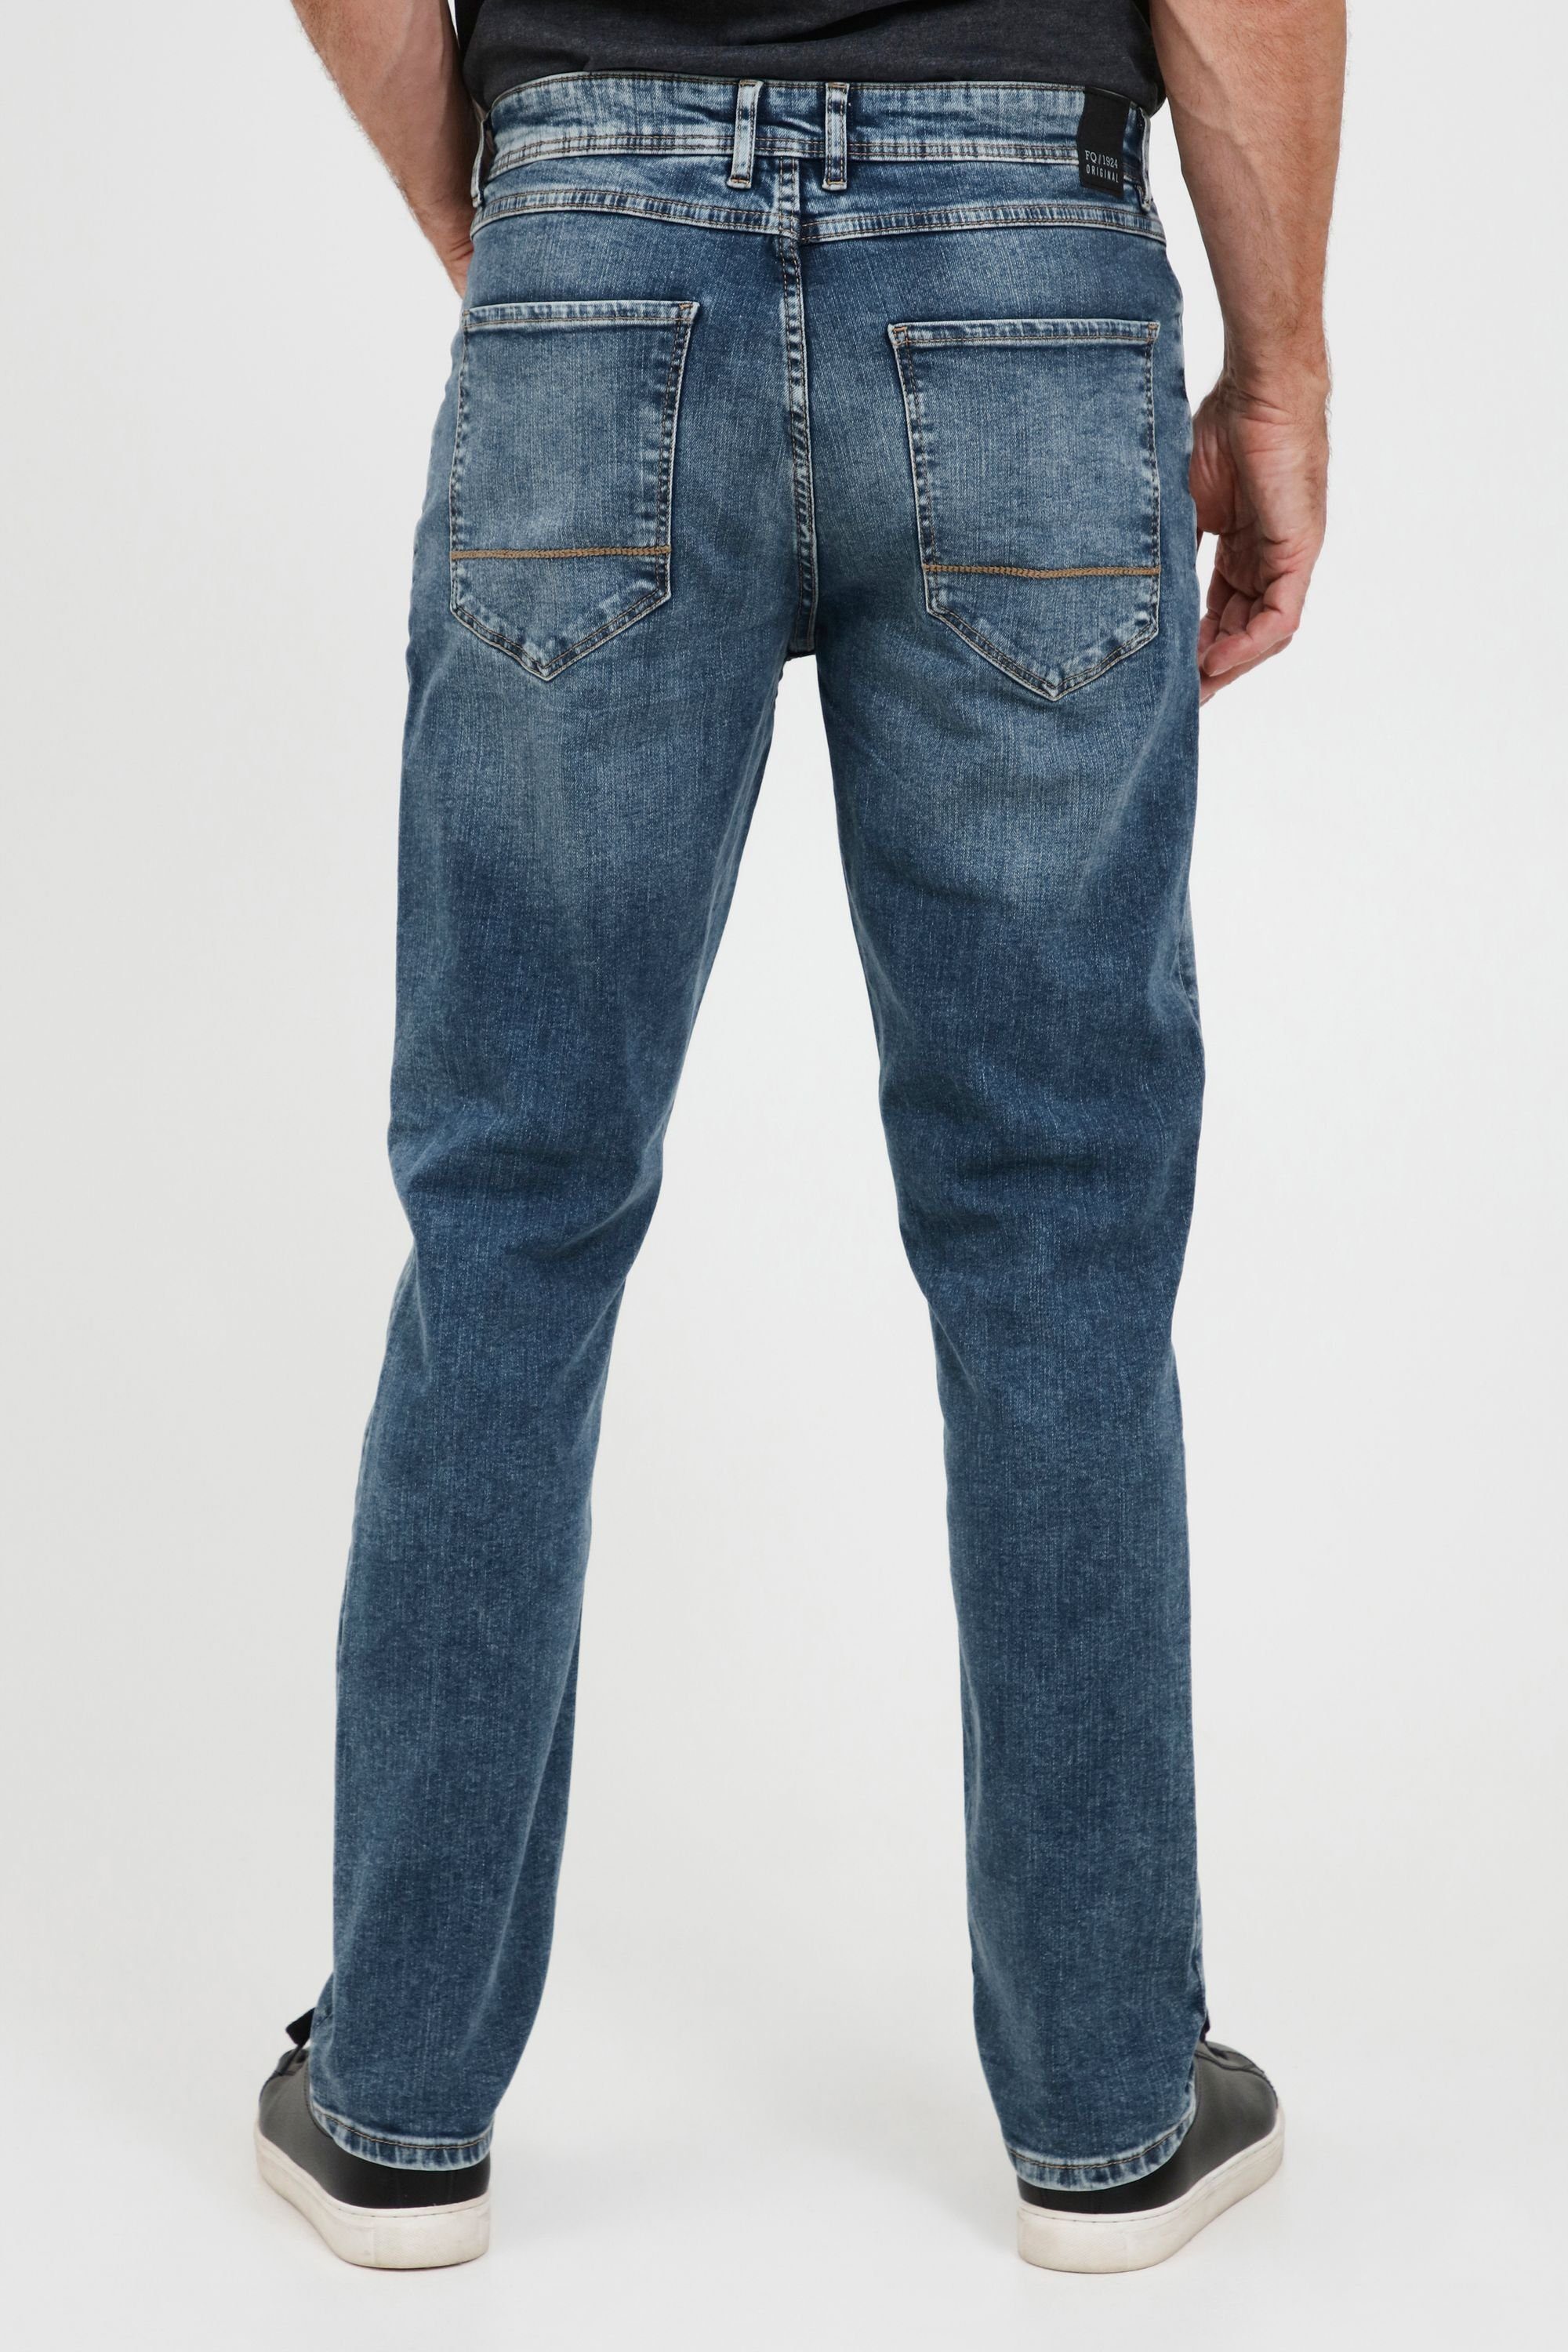 FQNoah Blue Jeans Middle Denim Gerade FQ1924 FQ1924